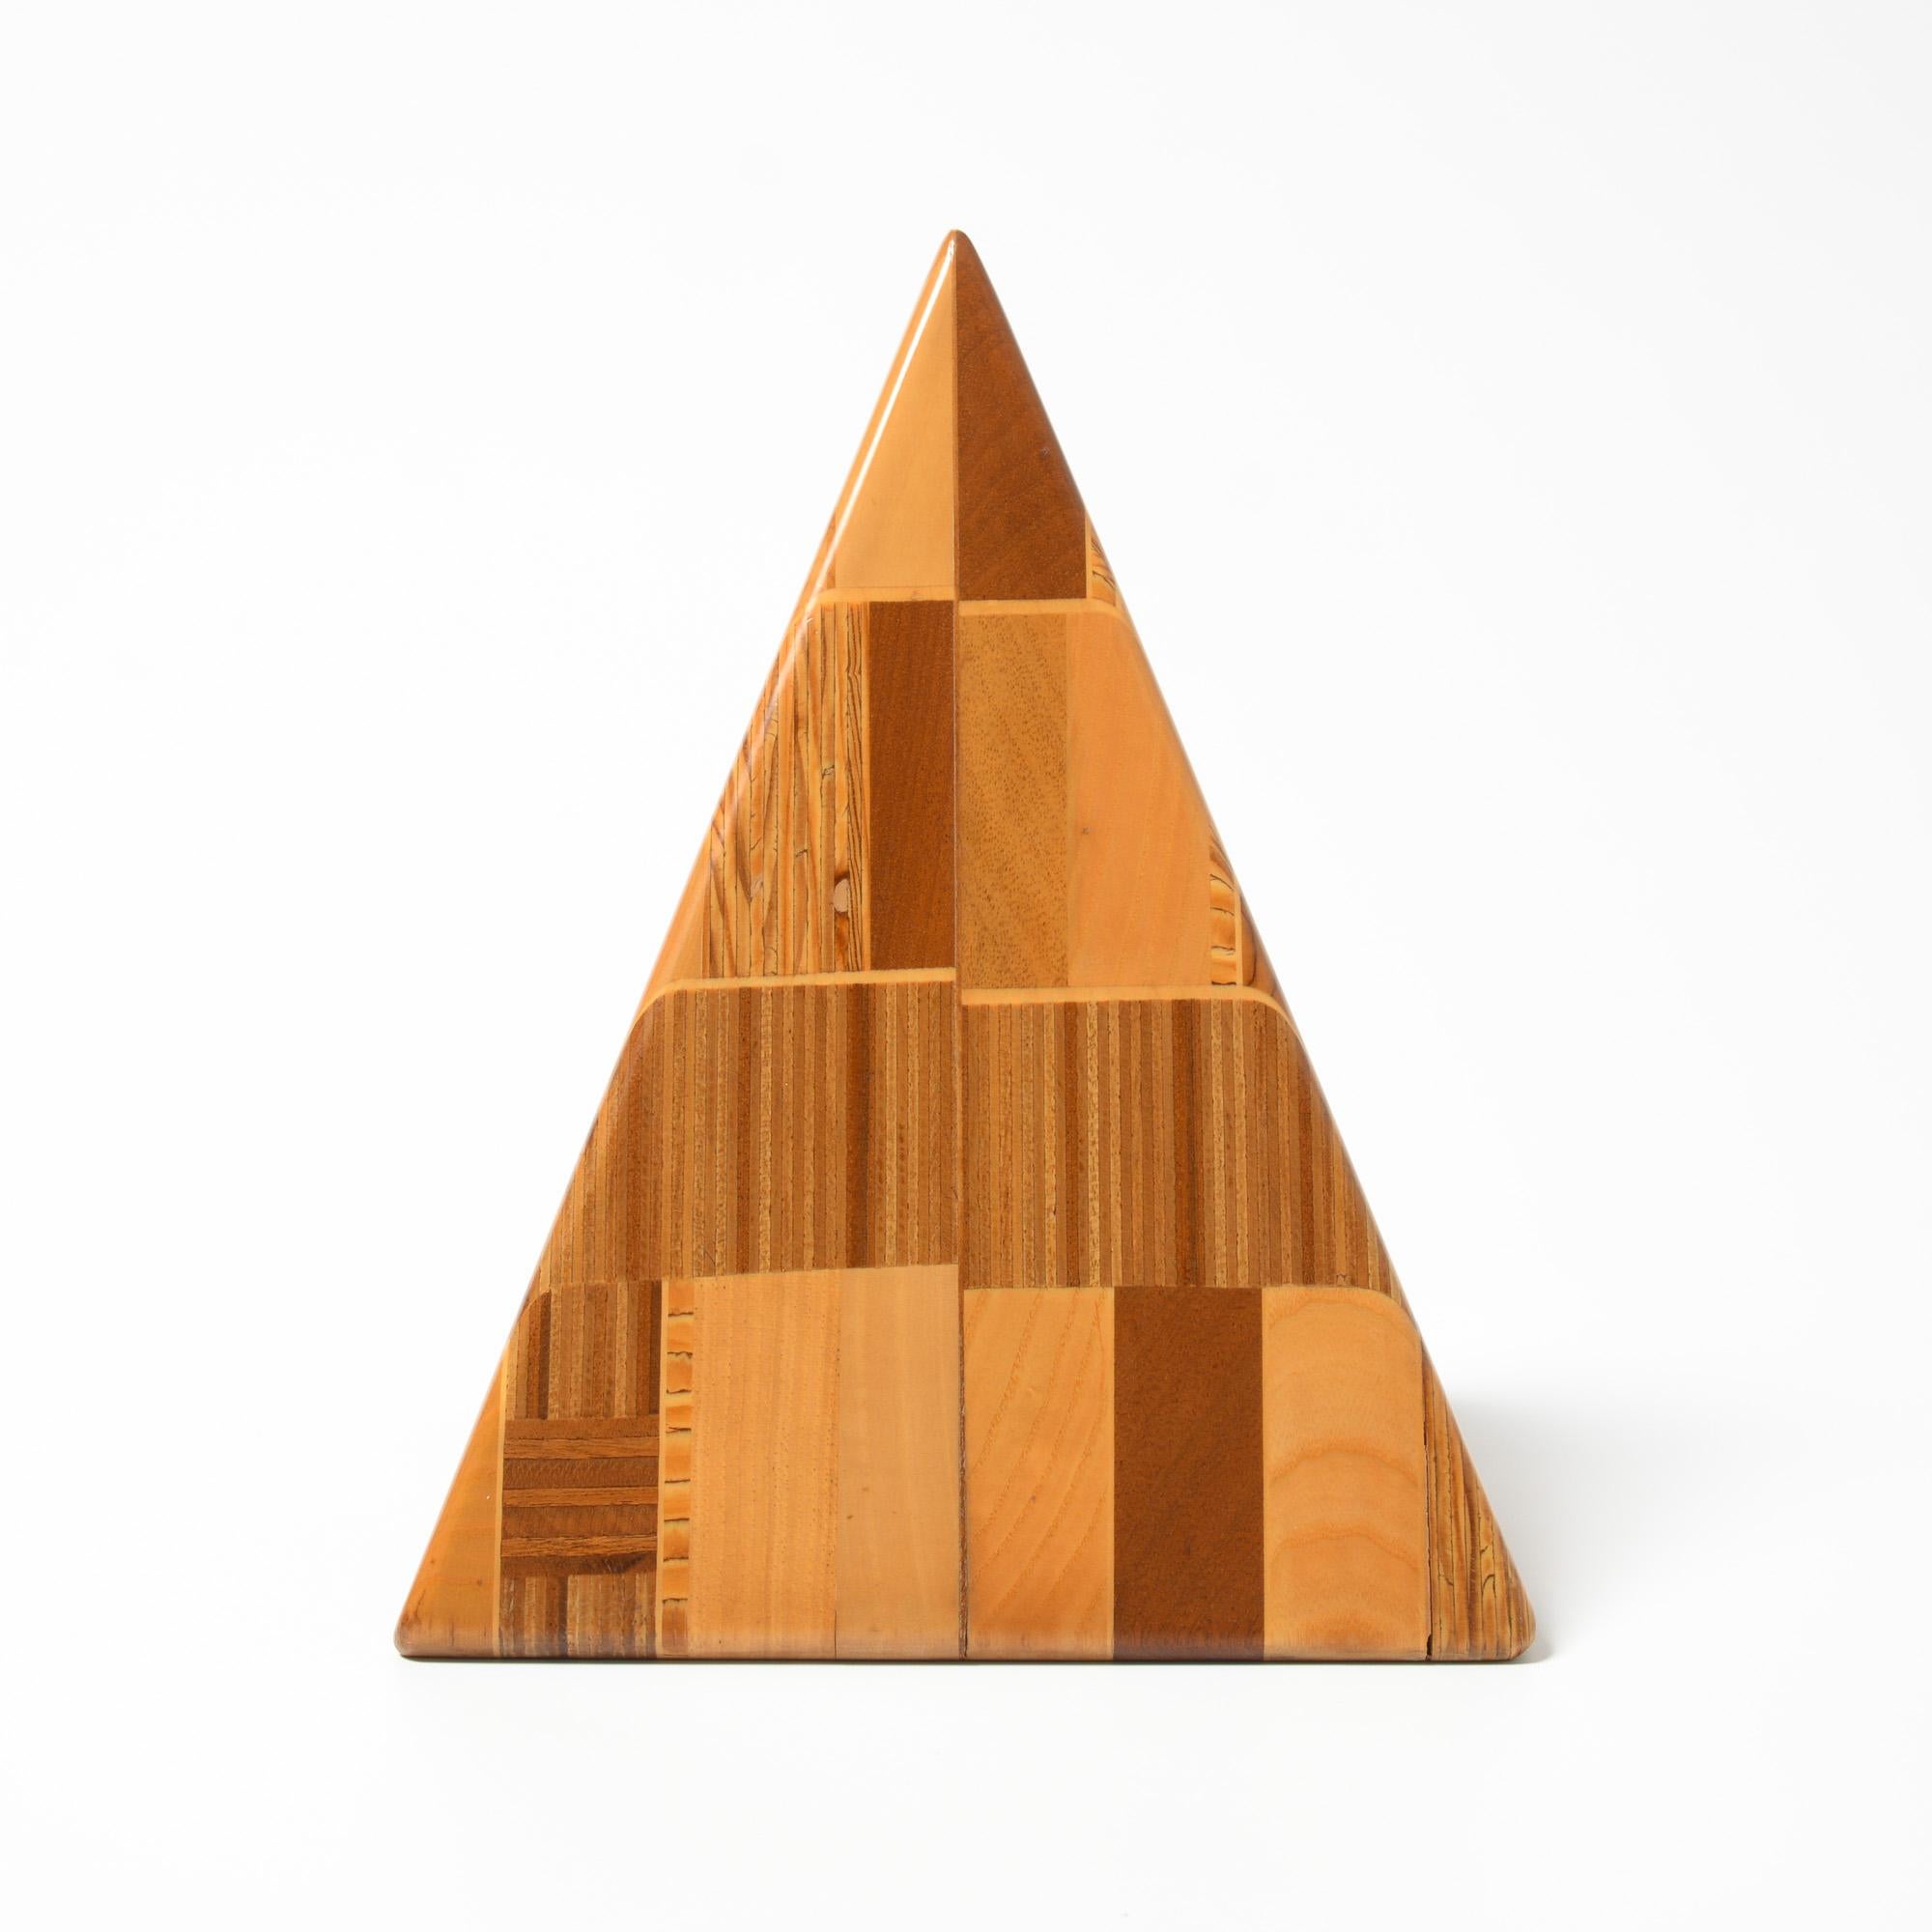 Brass Pyramid Sculpture by Pino Pedano